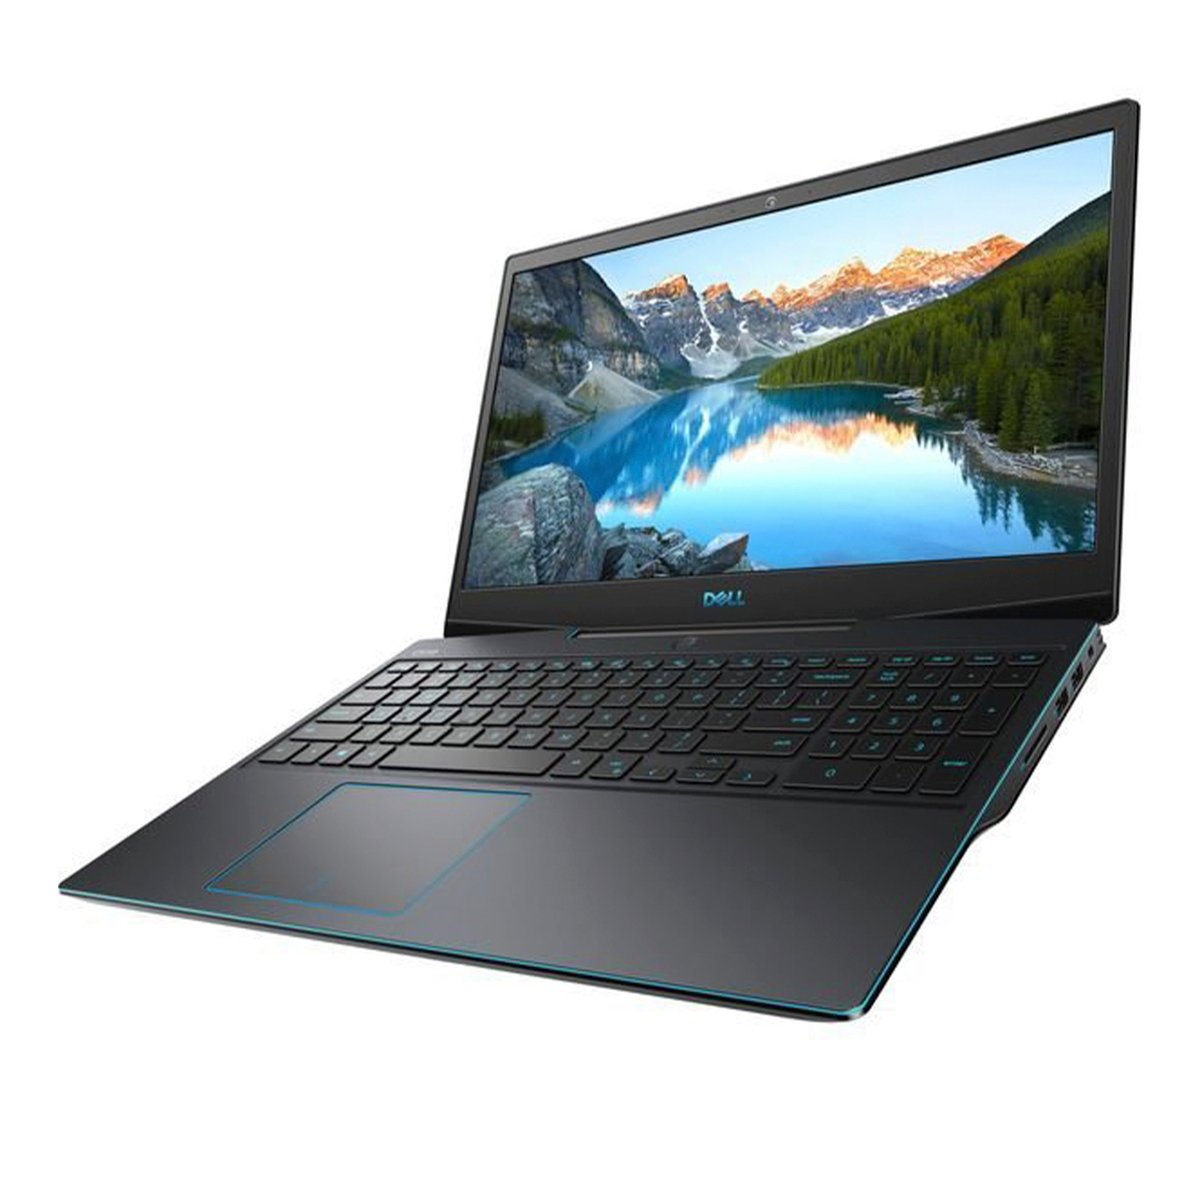 Dell 3500-G3-6000-BLK Gaming Laptop,Intel® Core i5-10300H Processor ,8GB RAM,1TB HDD ,256GB SSD,NVIDIA(R) GeForce(R) GTX 1650 4GB GDDR6,Windows10,15.6inch,Black